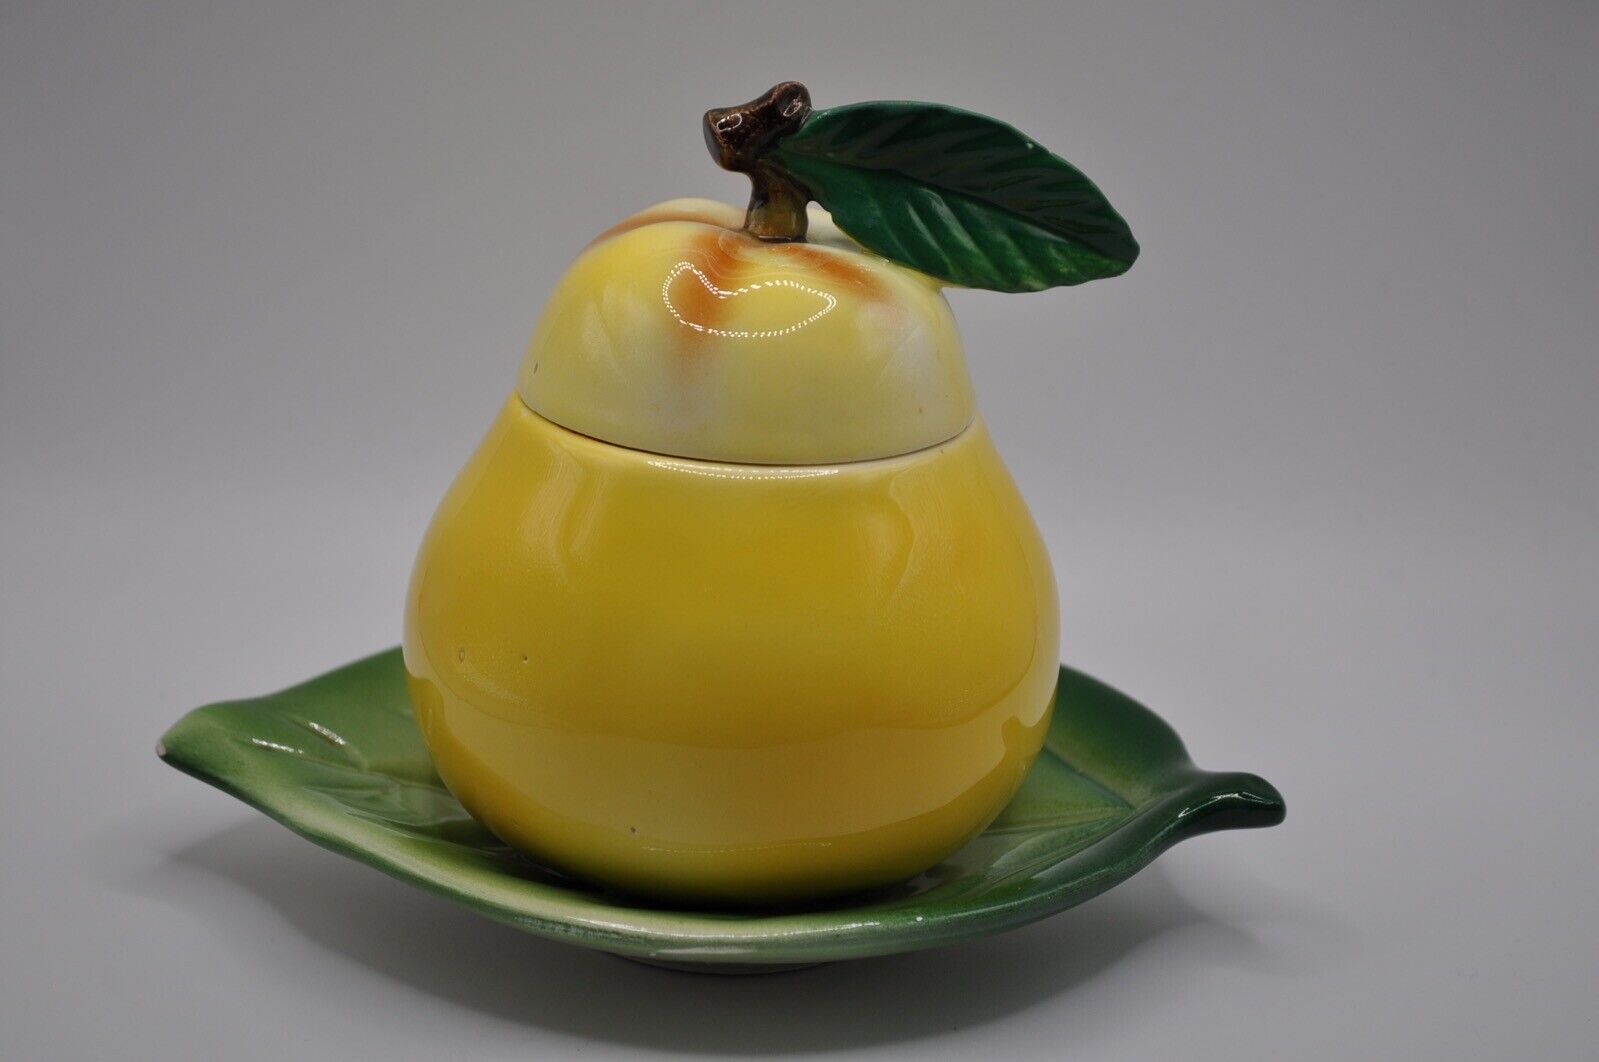 Vintage Pear Shaped Jar with Lid Lefton Jelly Jam Jar made in Japan